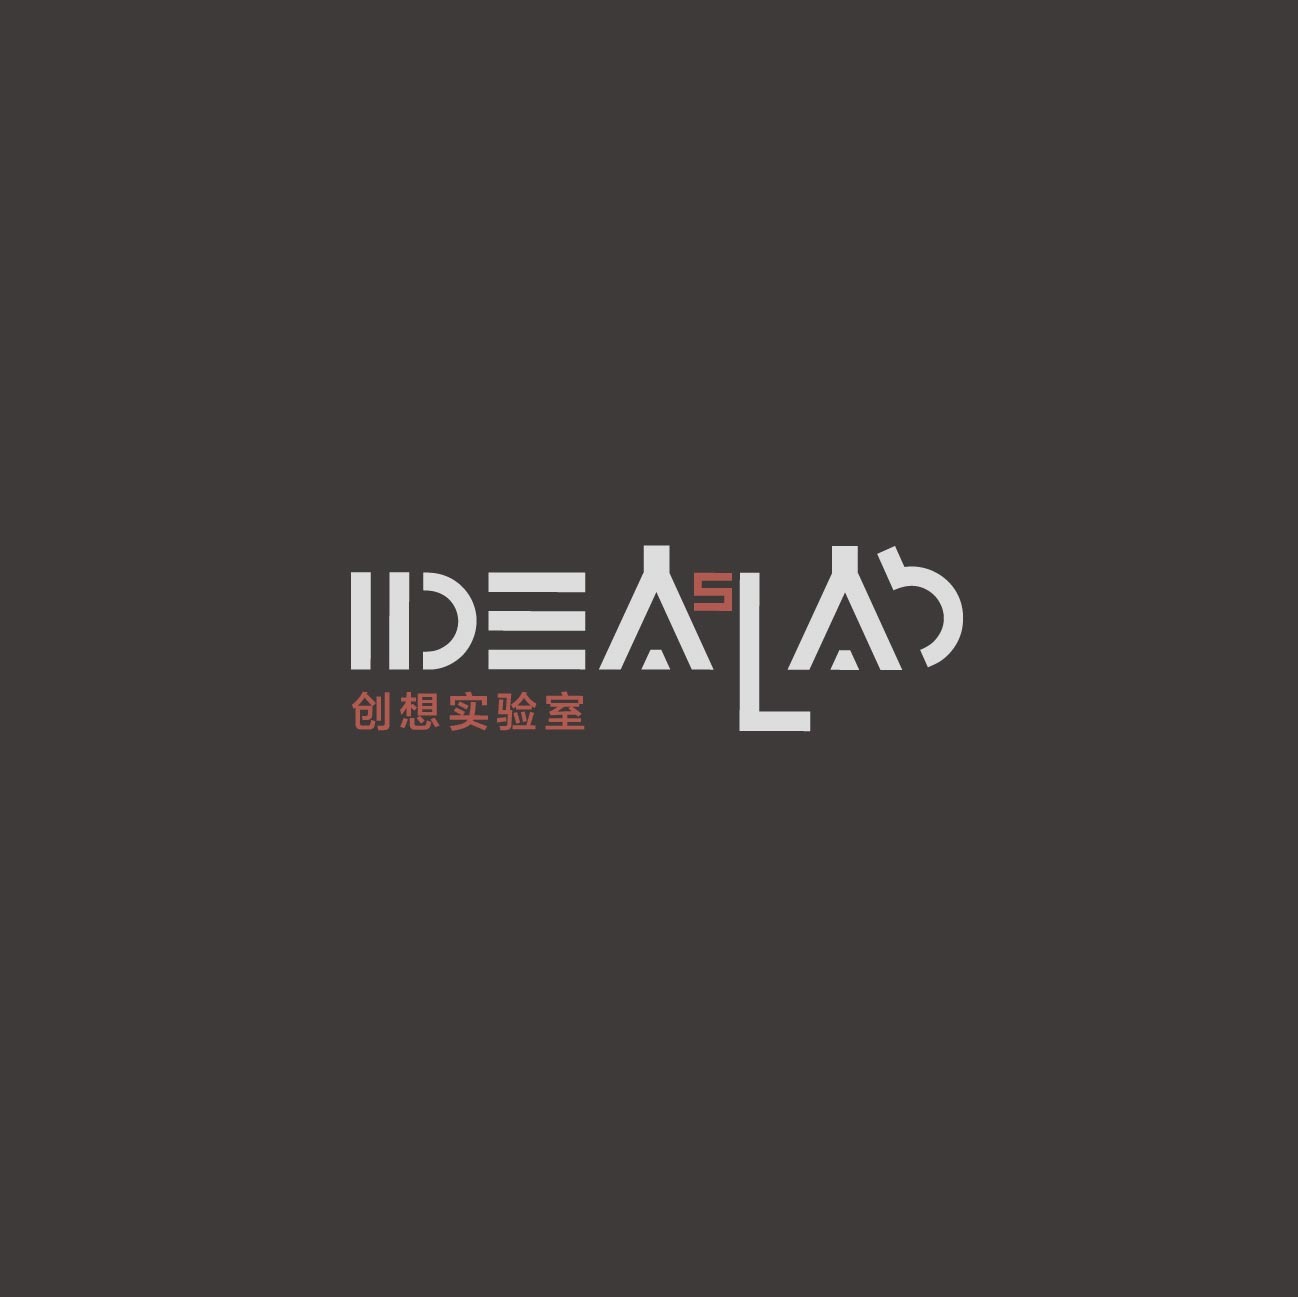 IdeasLab